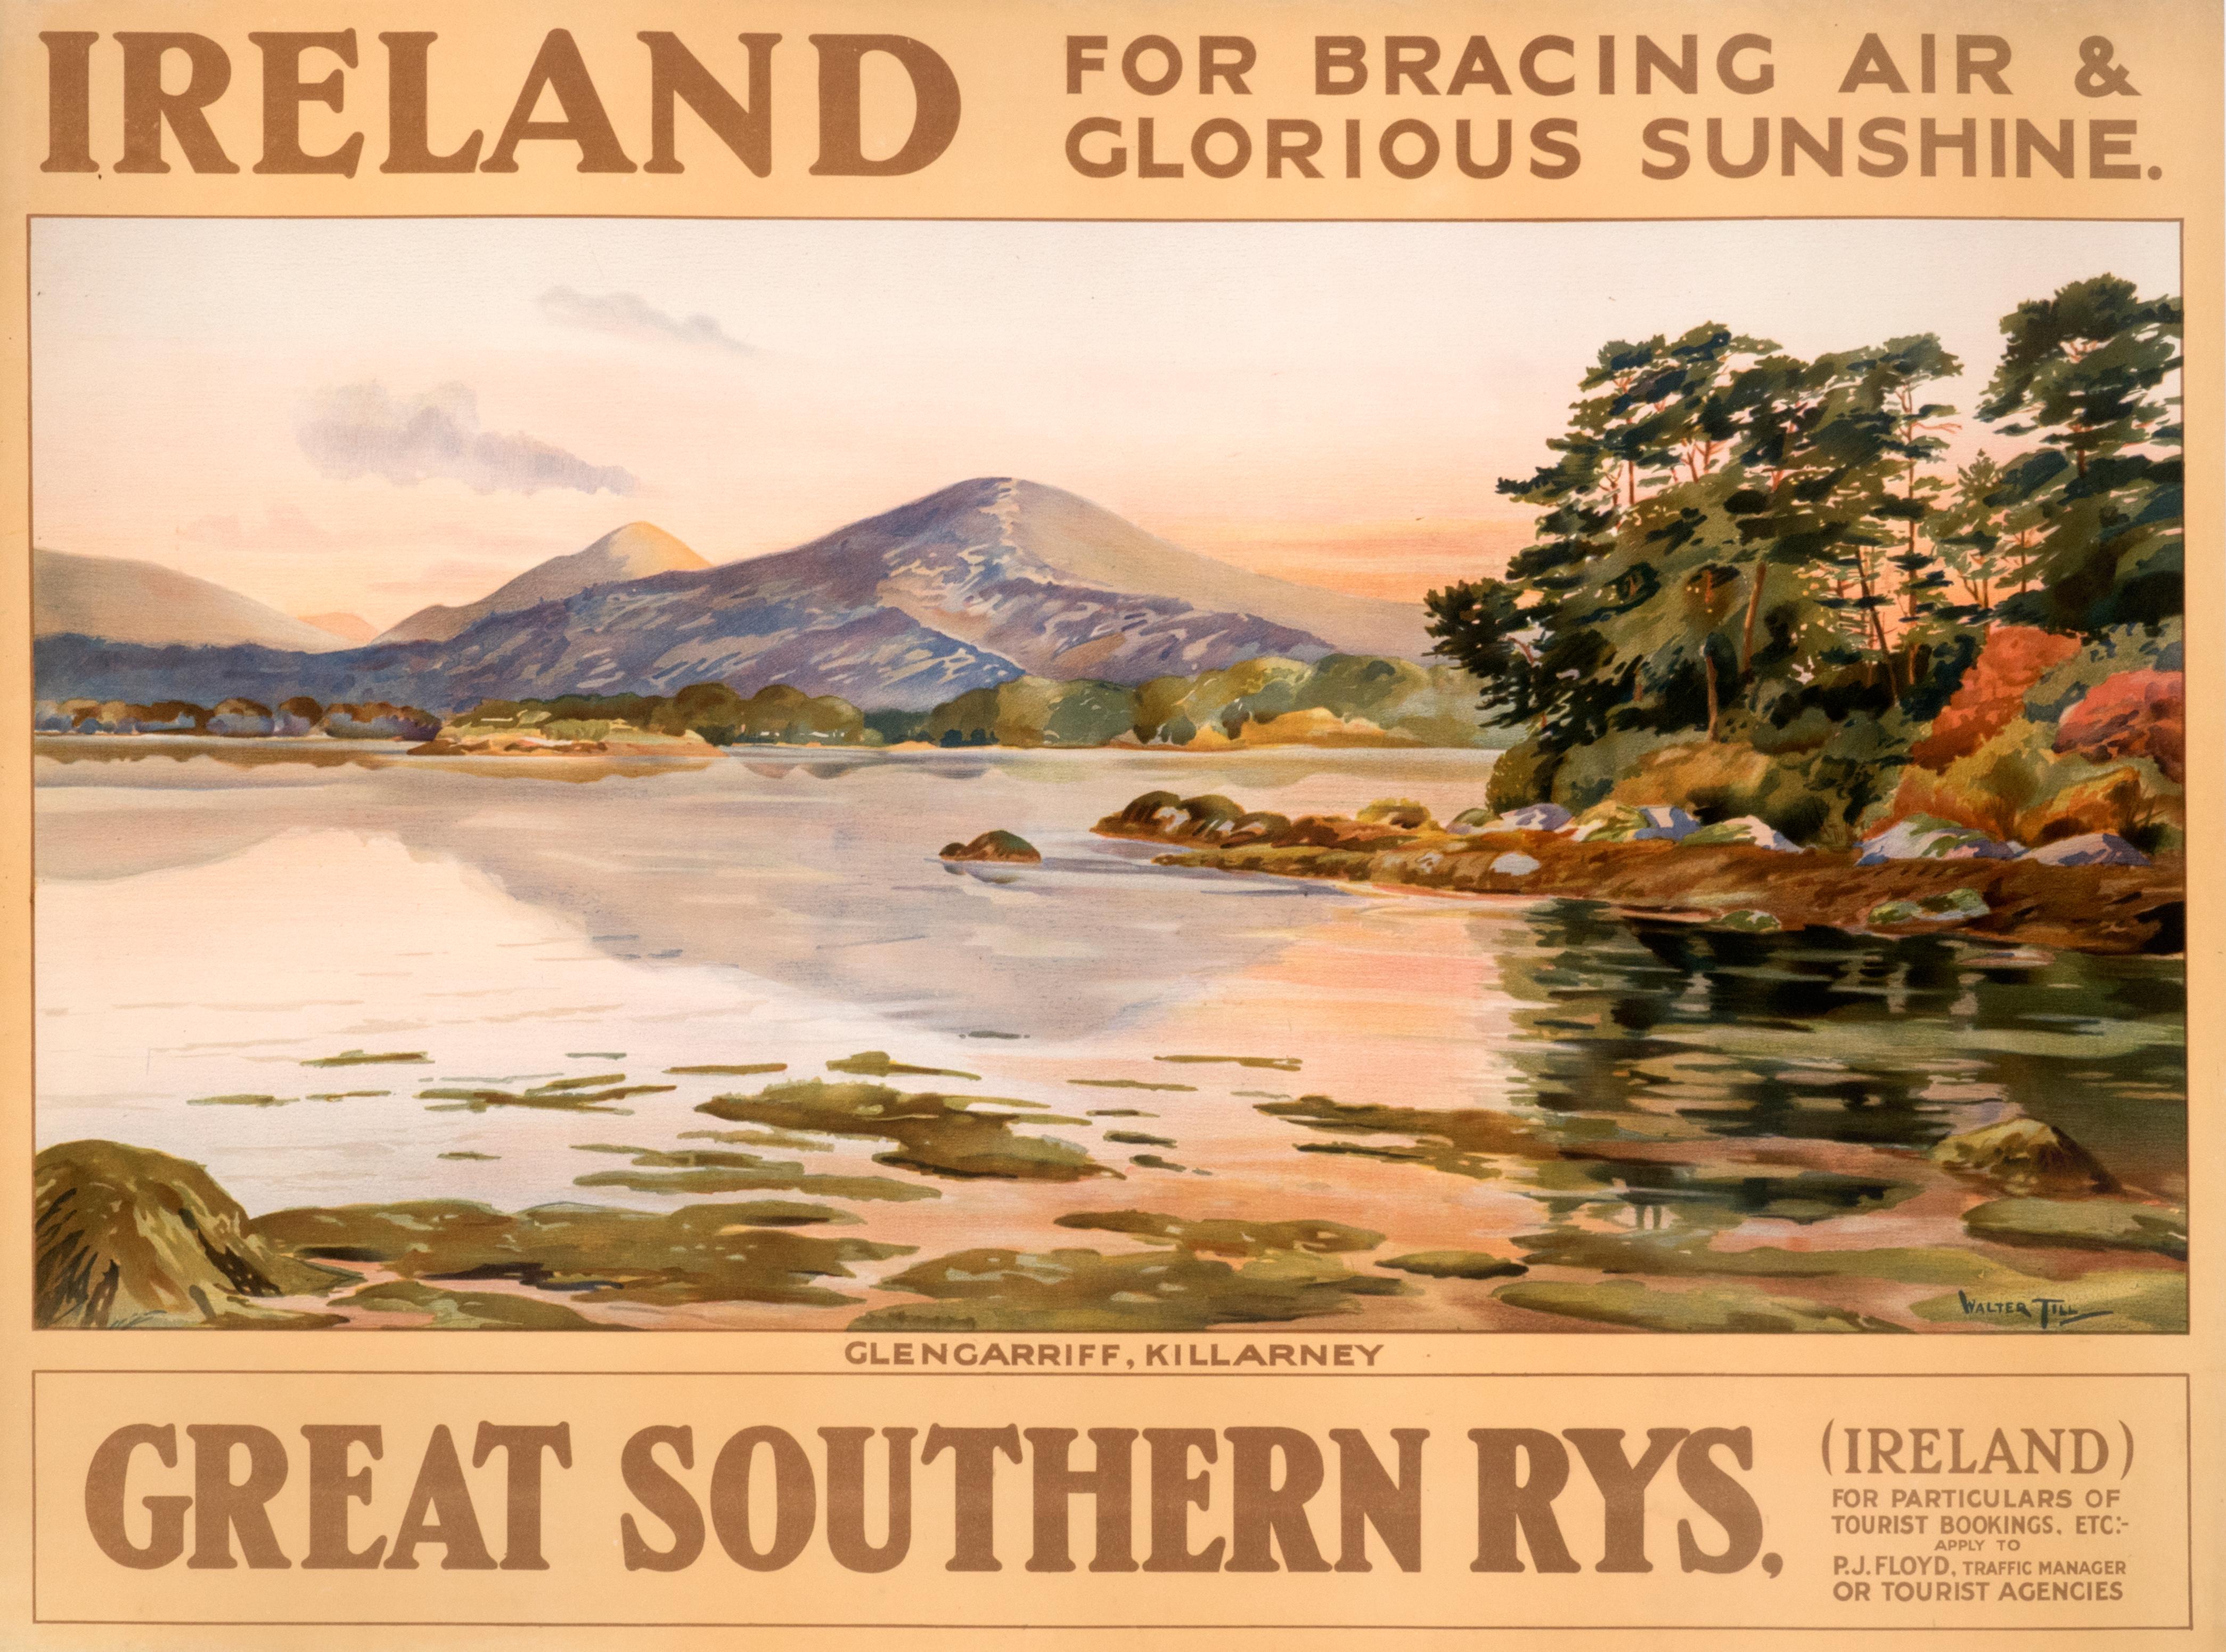 Walter Till Landscape Print - "Ireland - For Bracing Air & Glorious Sunshine" Original Vintage Irish Poster 